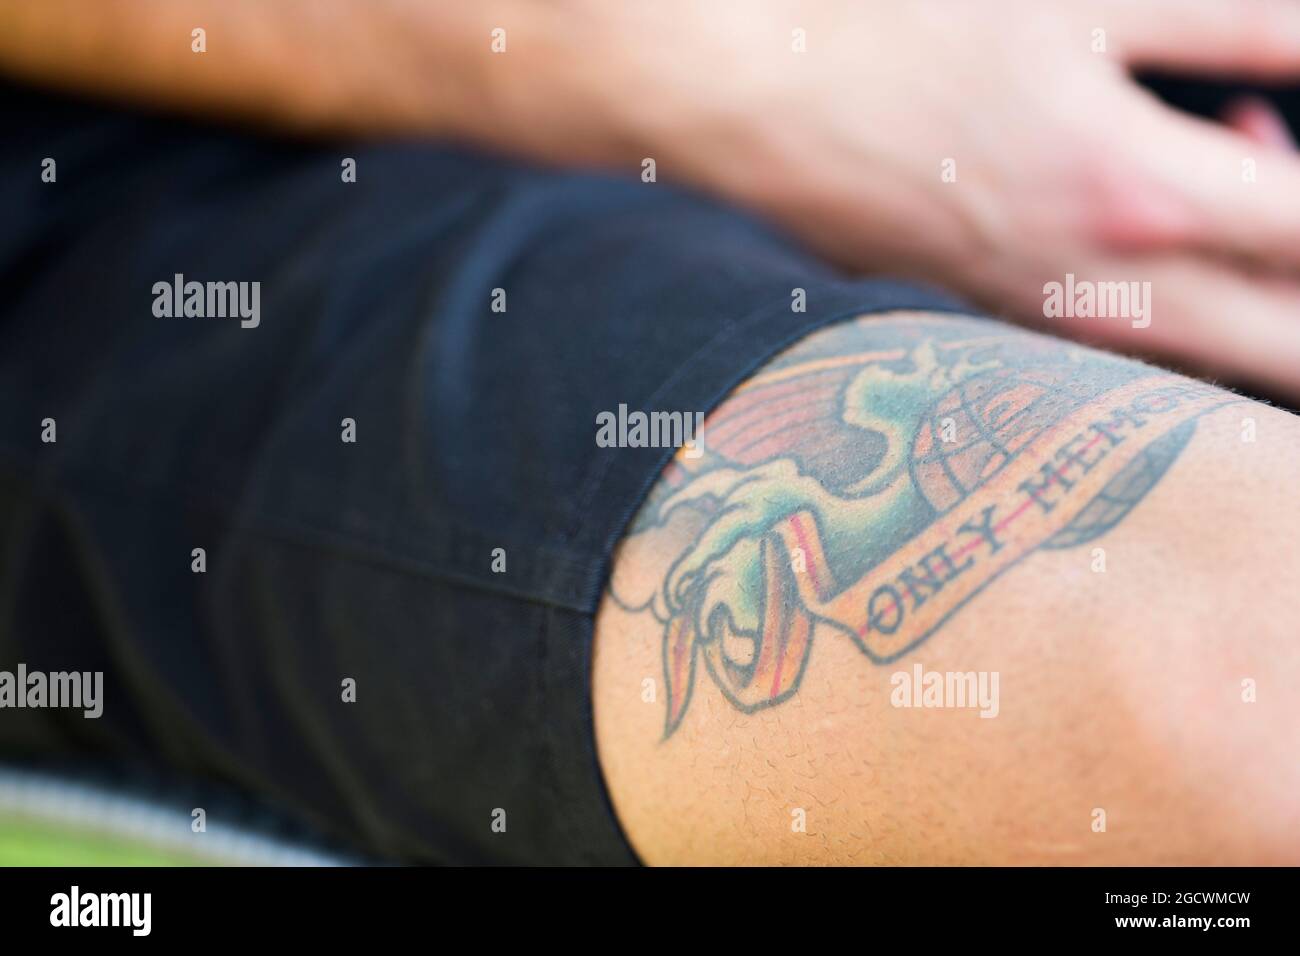 Daniel Ricciardo Aus Red Bull Racing Tattoo On His Leg Australian Grand Prix Thursday 17th March 16 Albert Park Melbourne Australia Stock Photo Alamy